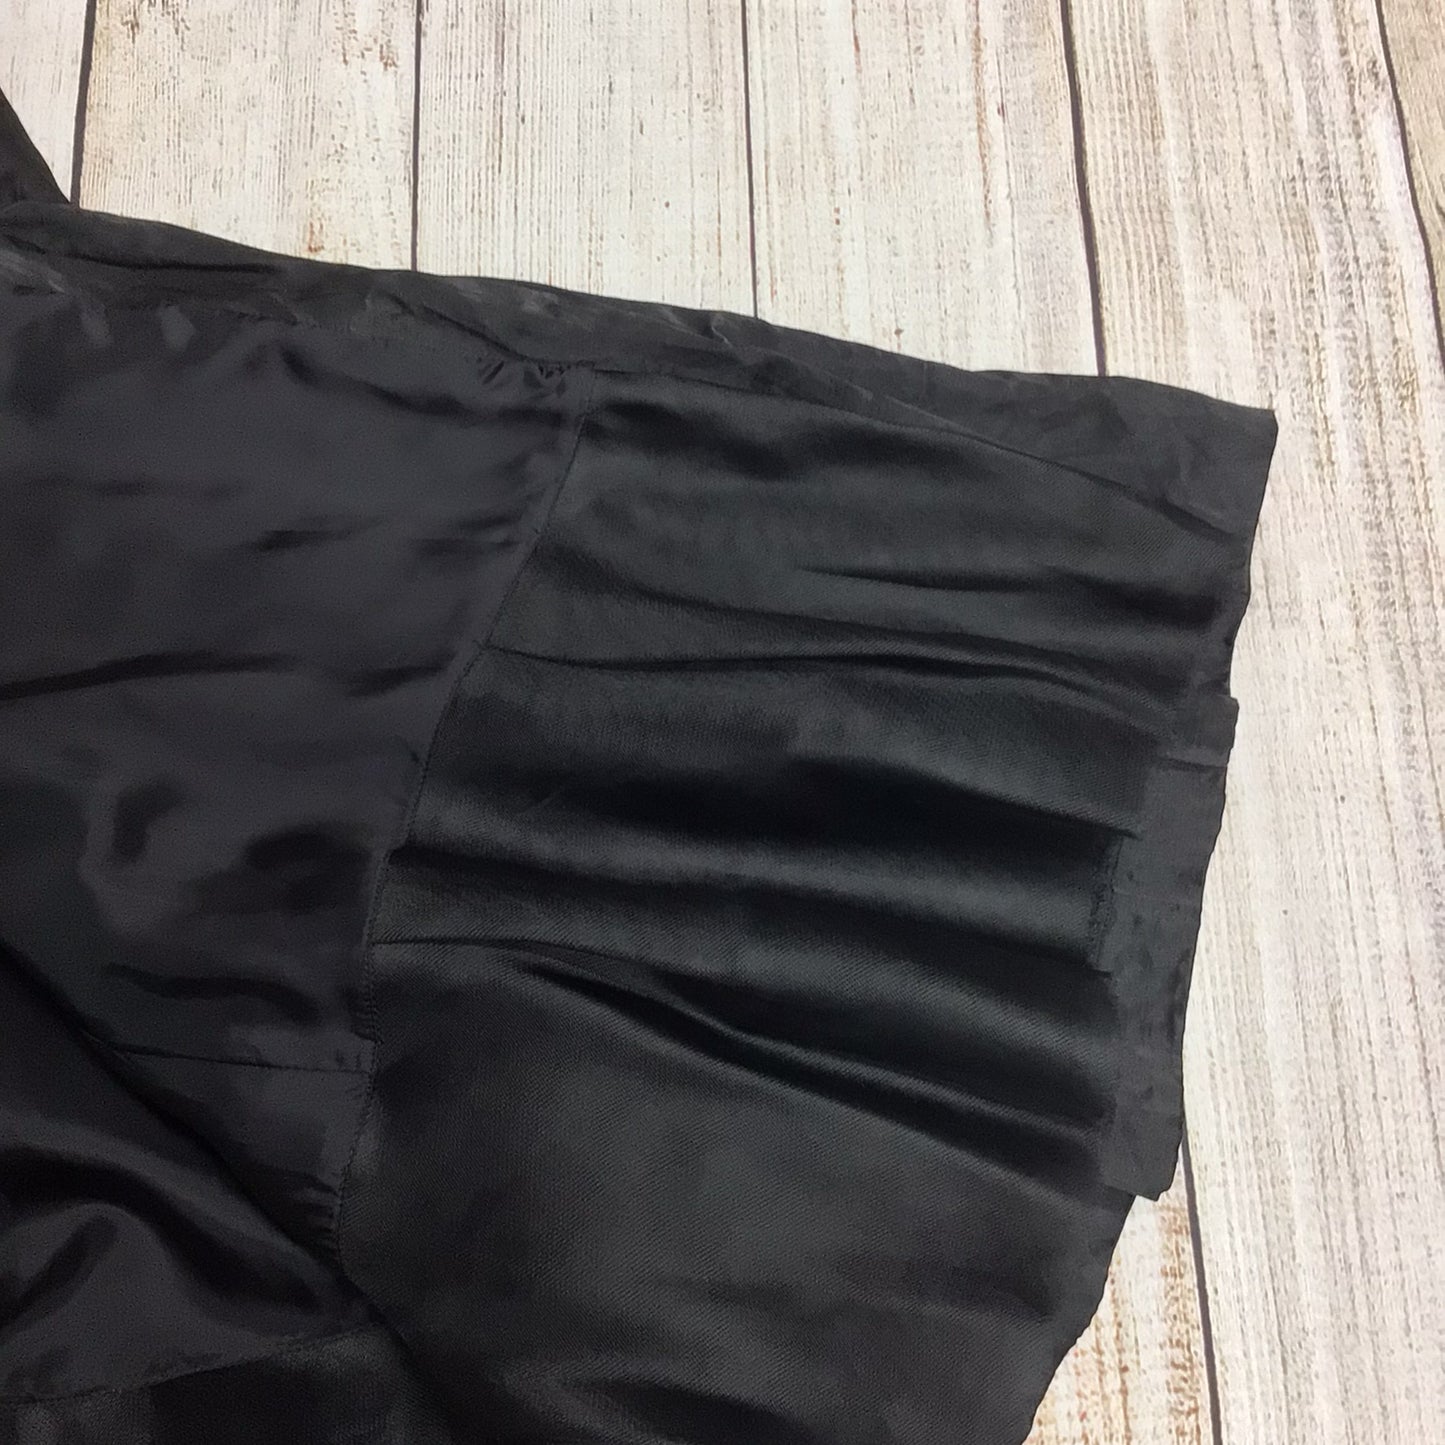 Eileen Fisher Black Silk & Cotton Blend Coat Size M